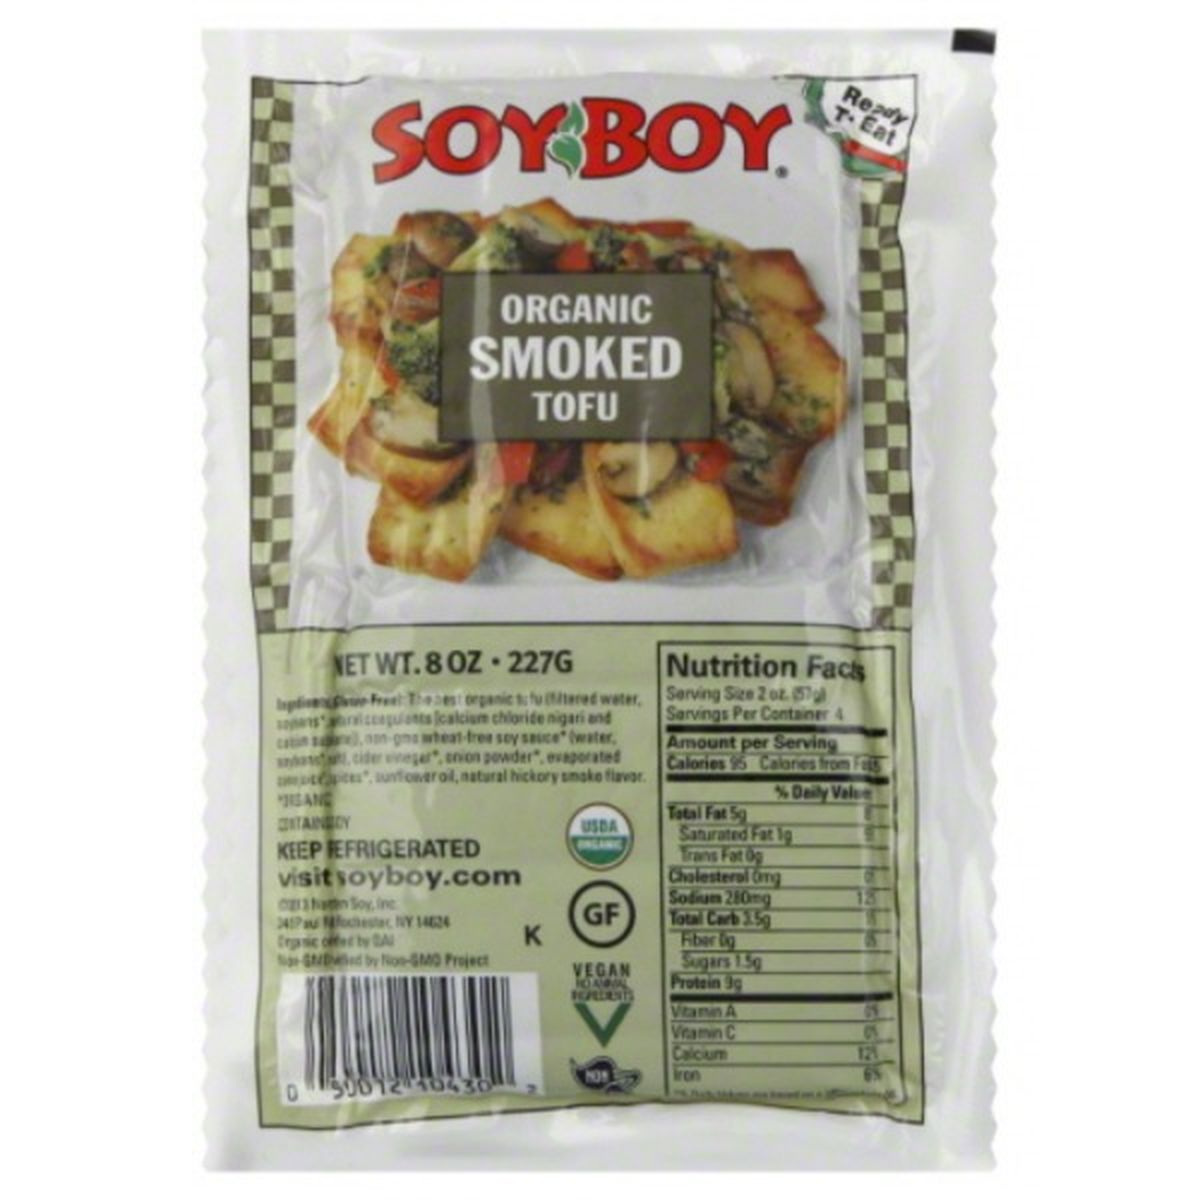 Calories in Soyboy Tofu, Organic, Smoked